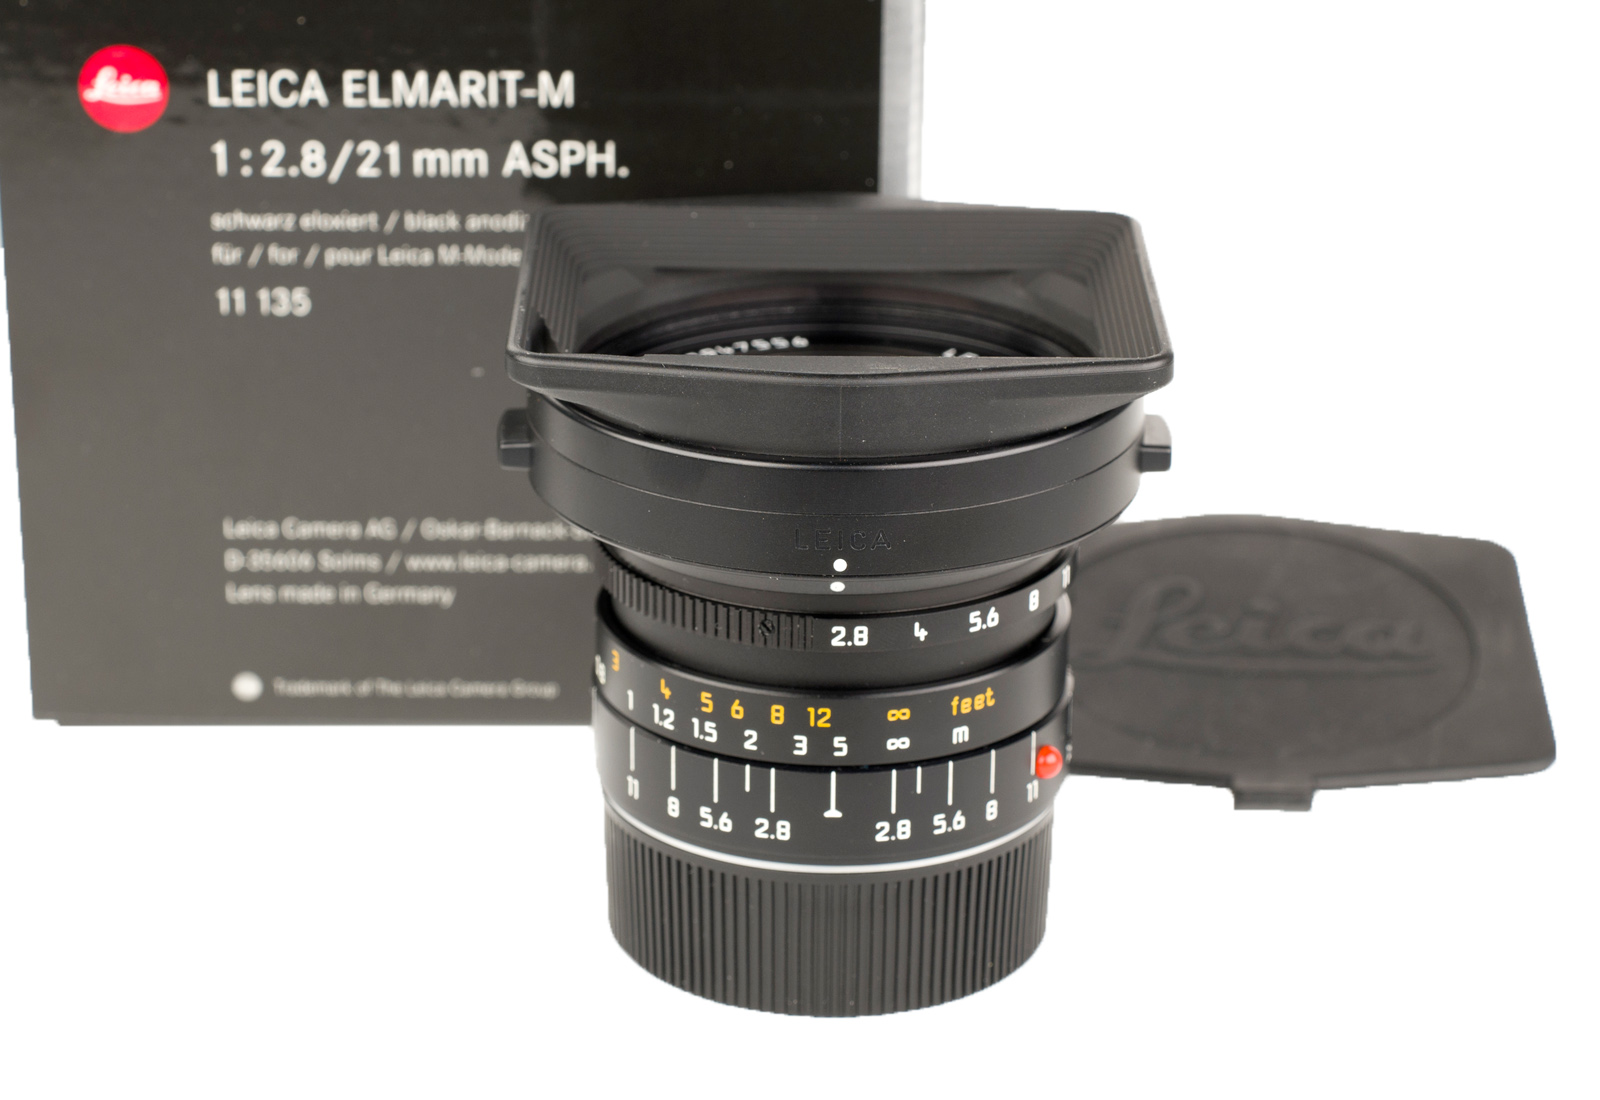 Leica Elmarit-M 1:2,8/21mm ASPH. black anodized 11135